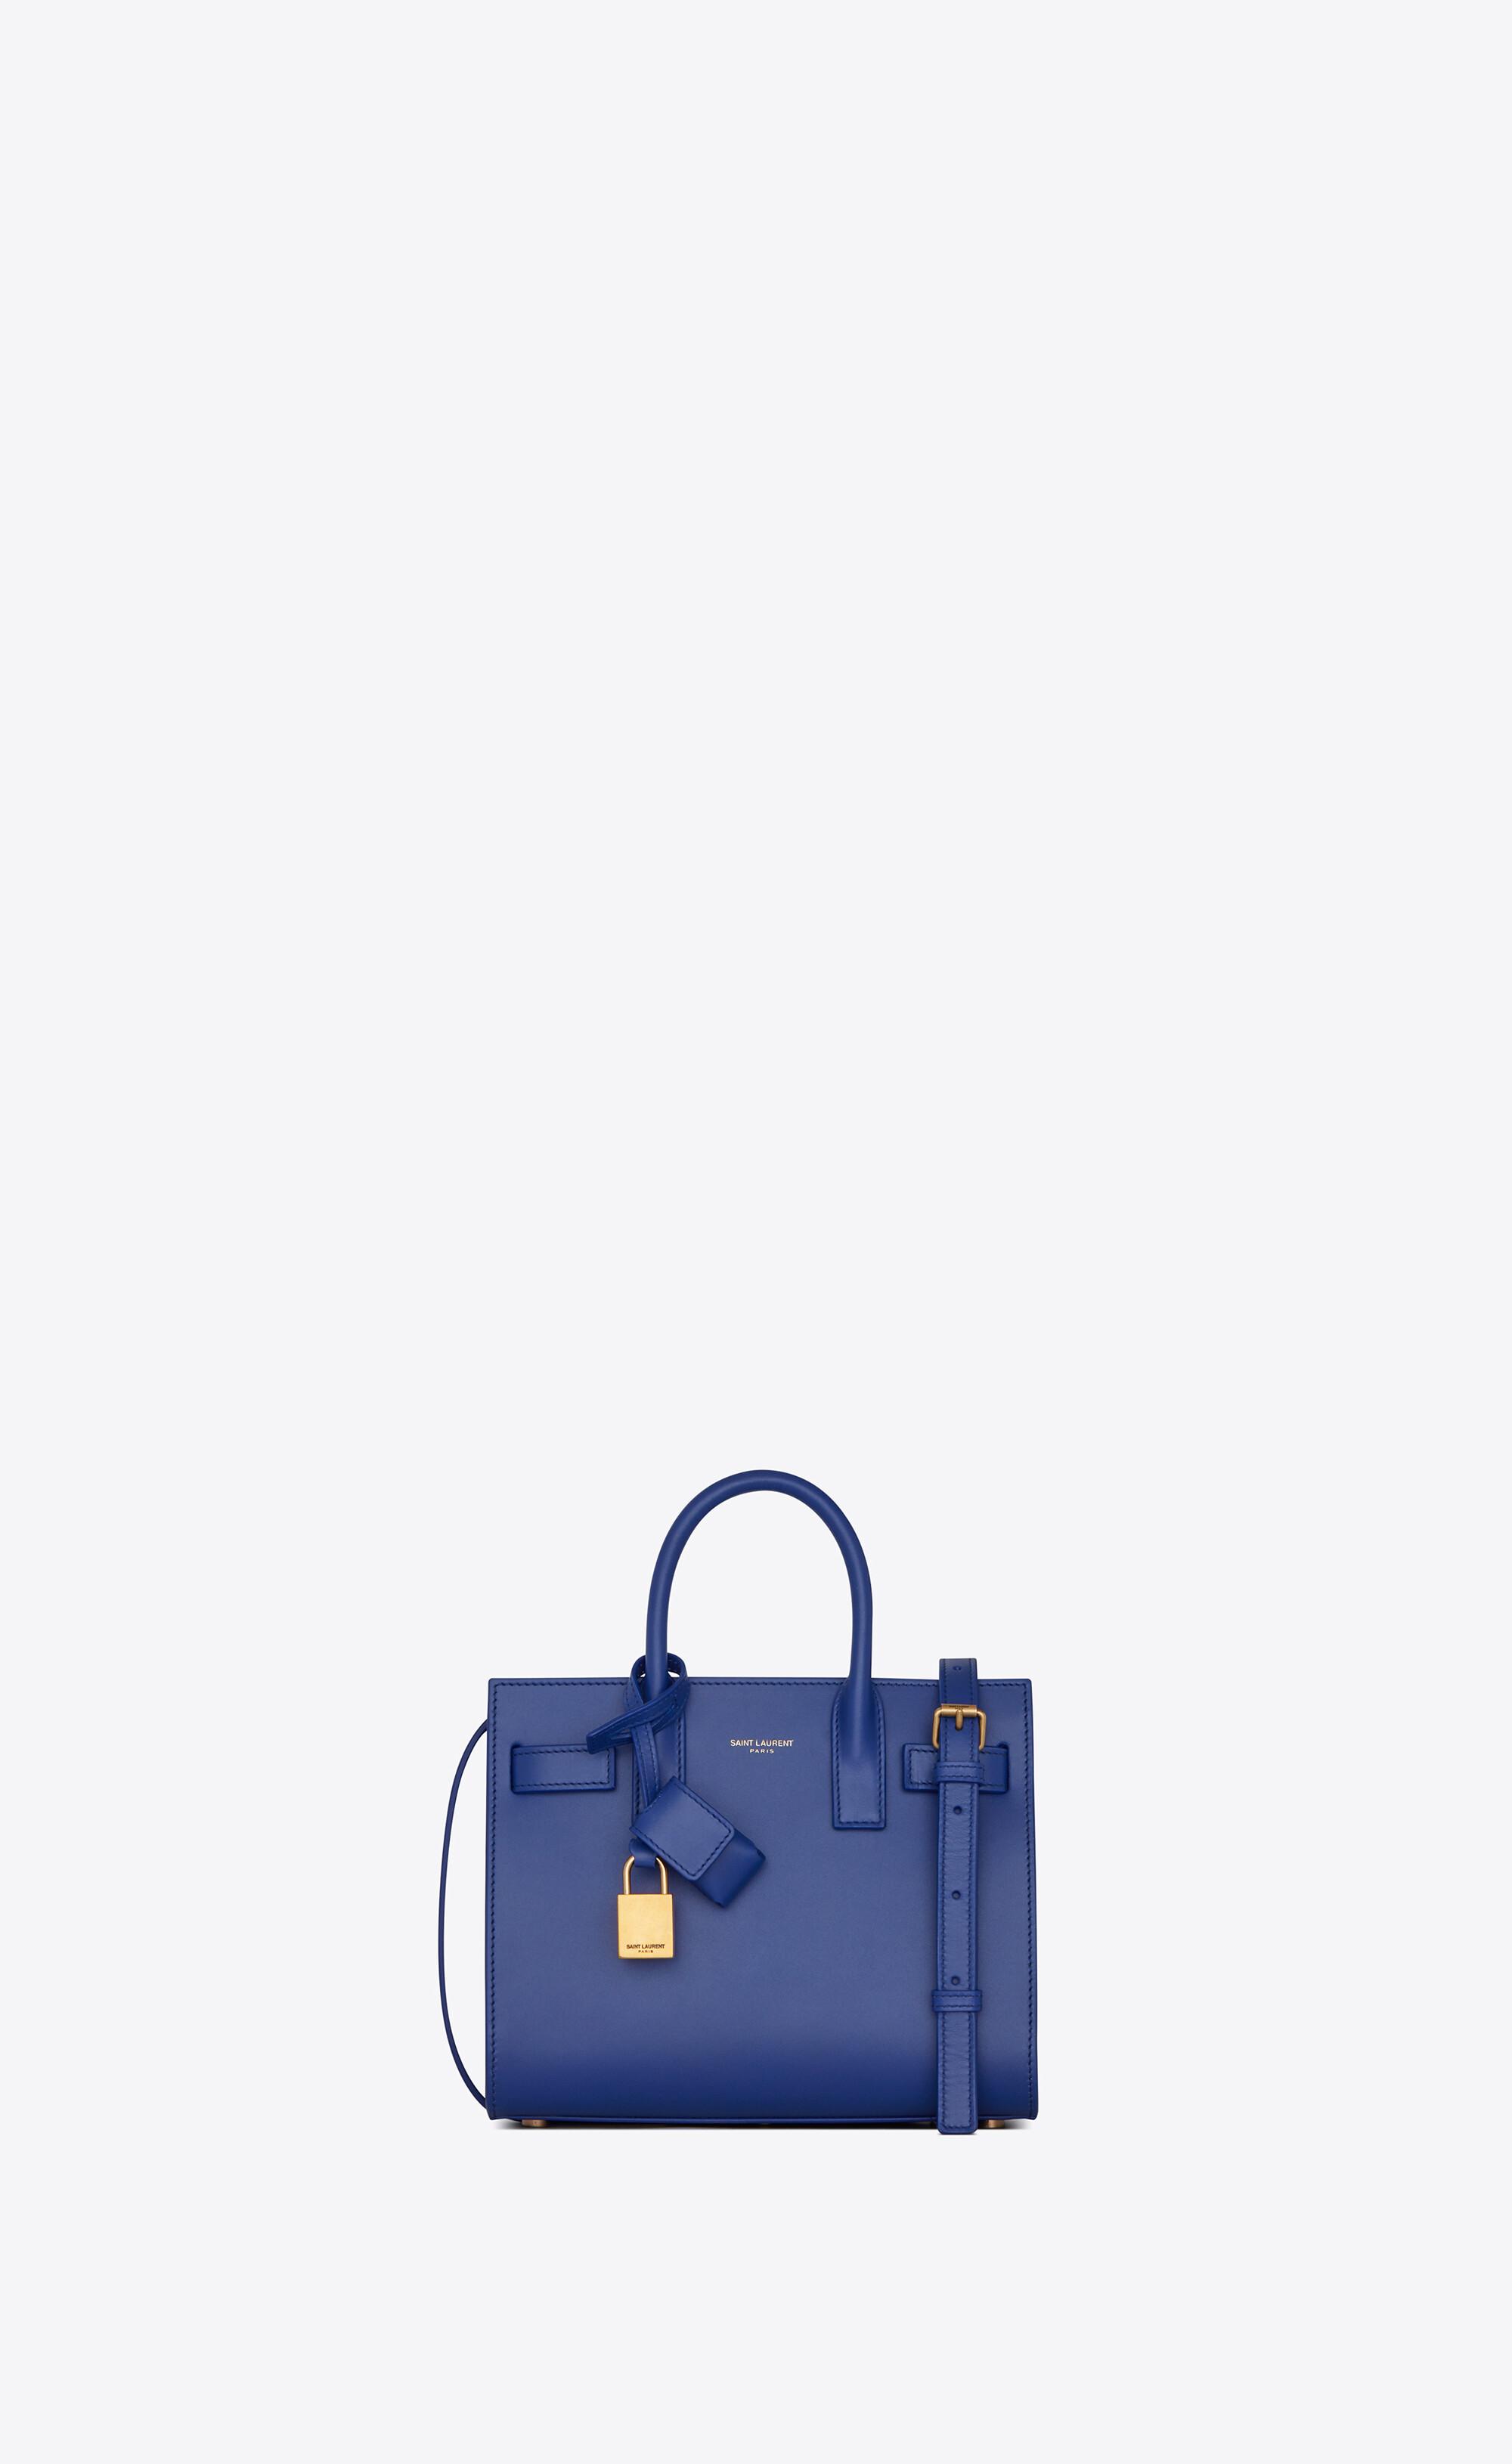 beautiful lavender blue saint laurent sac de jour mini. #bagporn